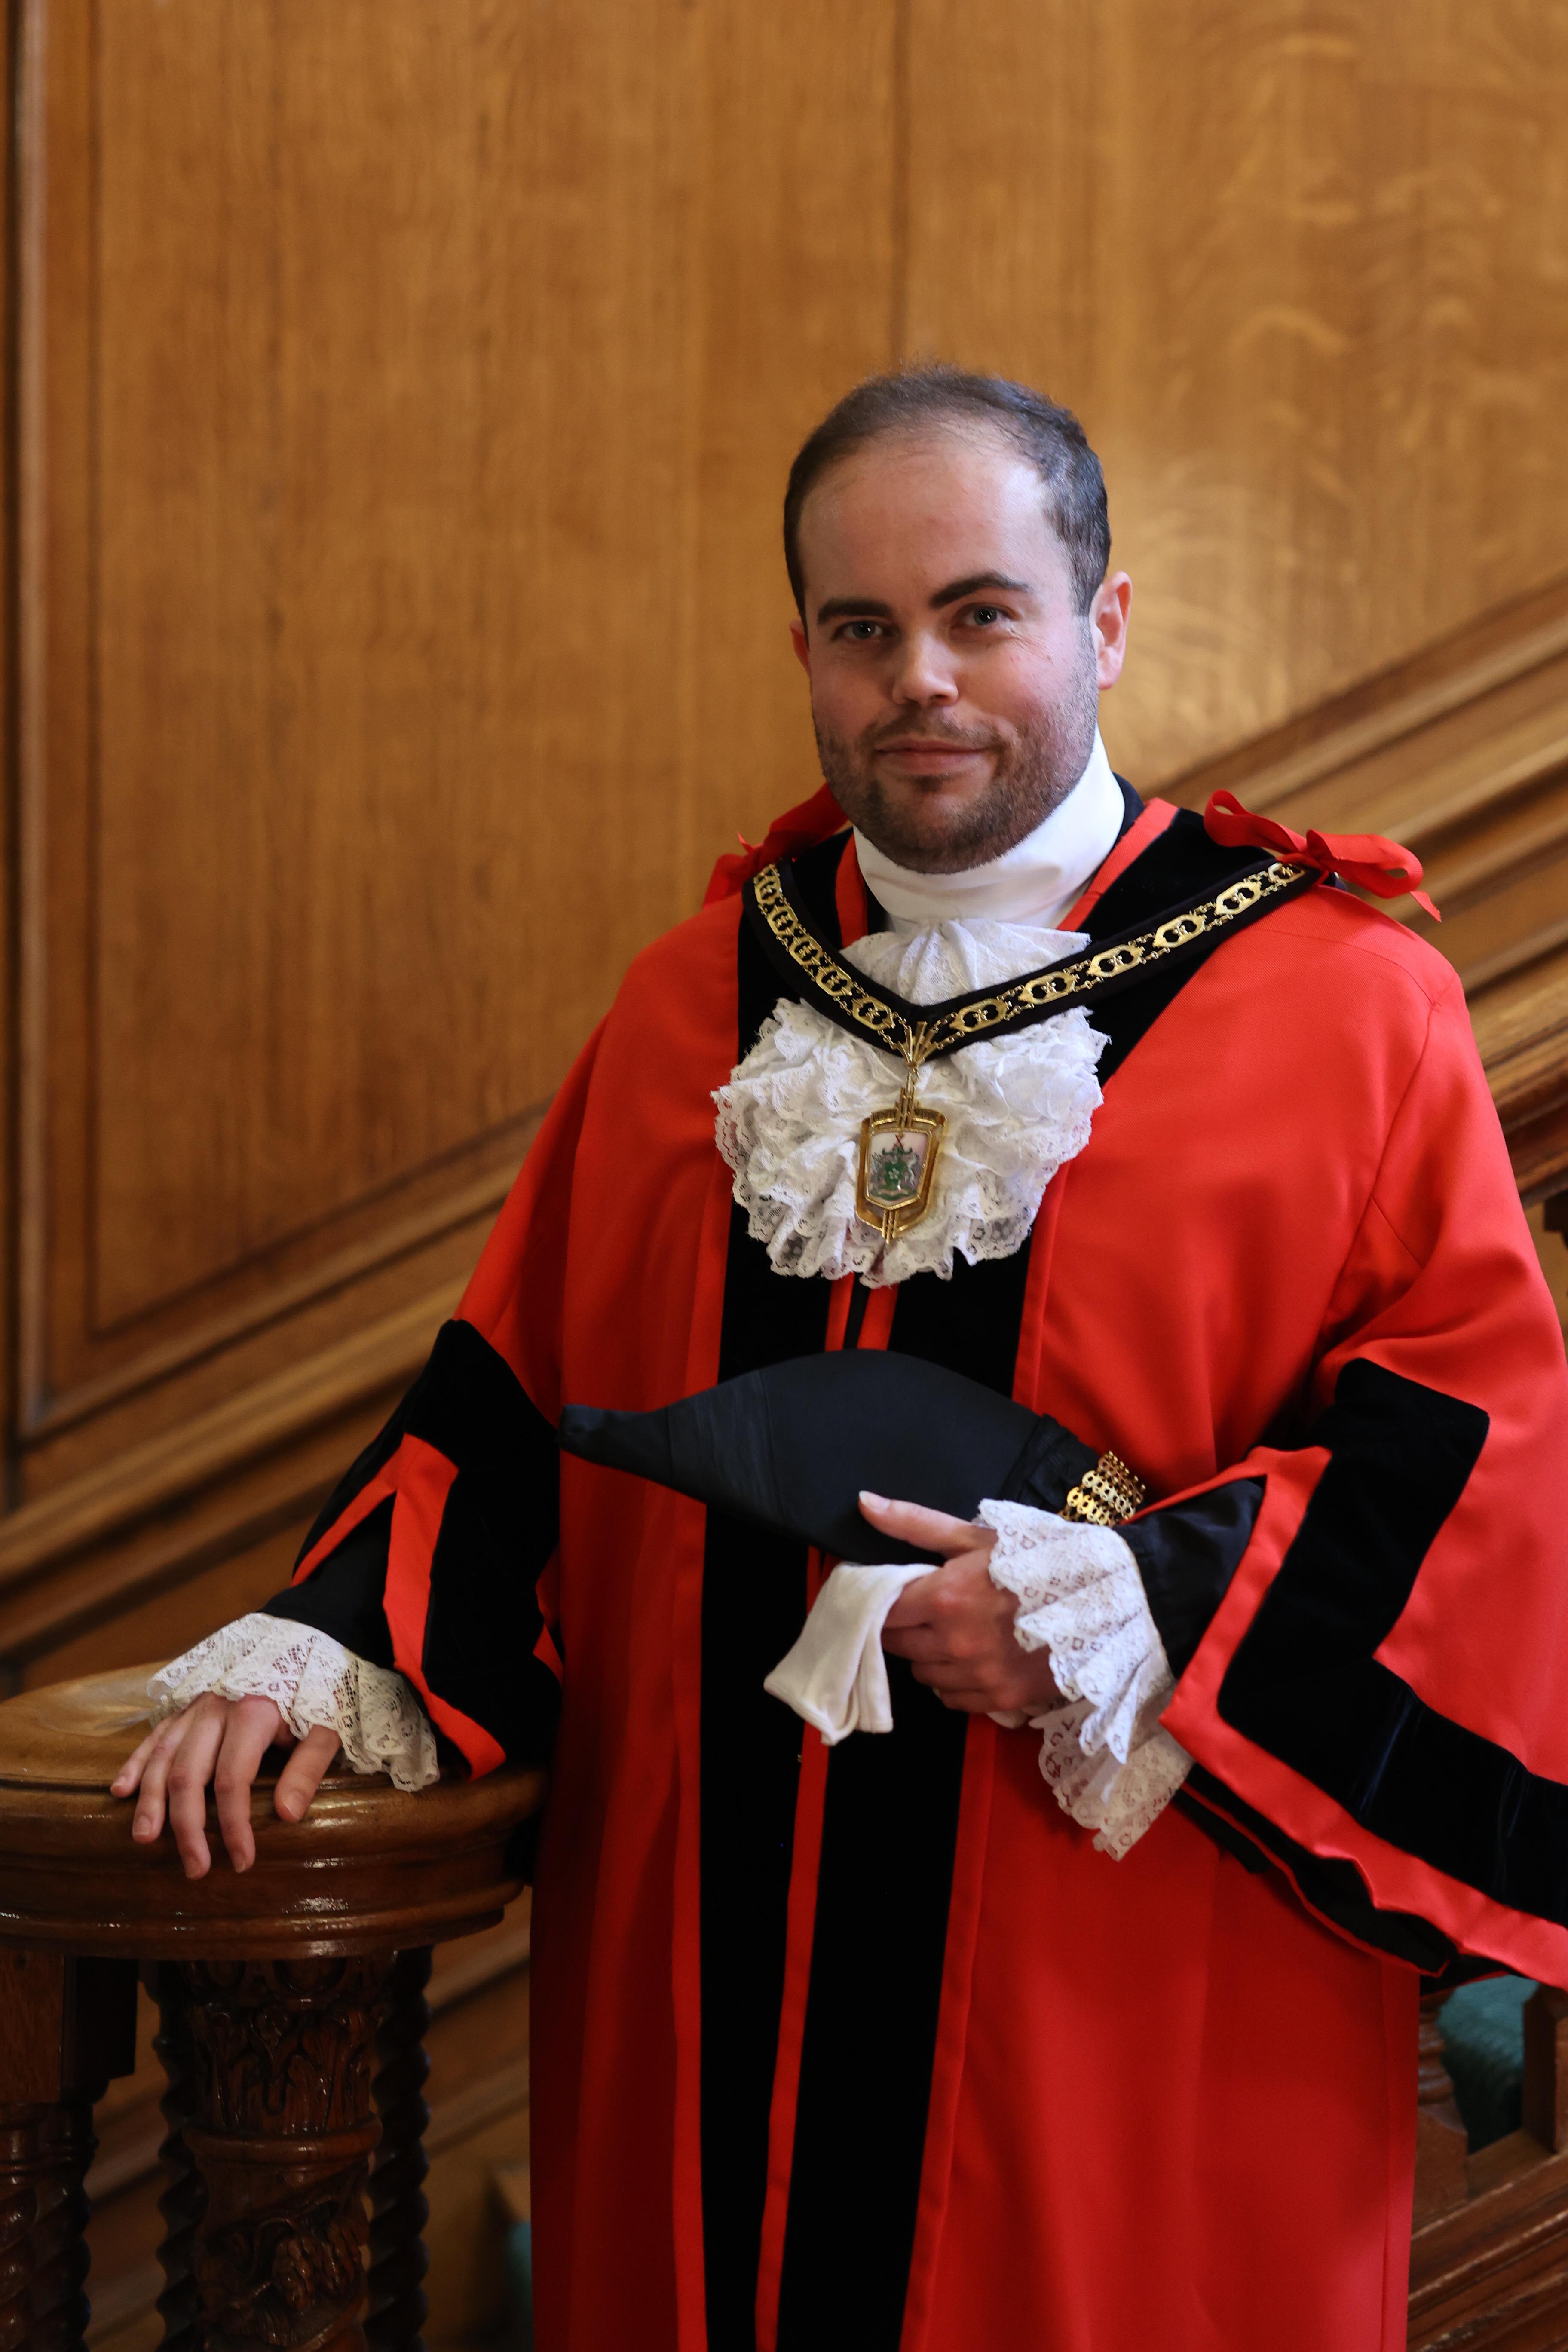 Deputy Mayor of Bromley Councillor Jonathan Andrews